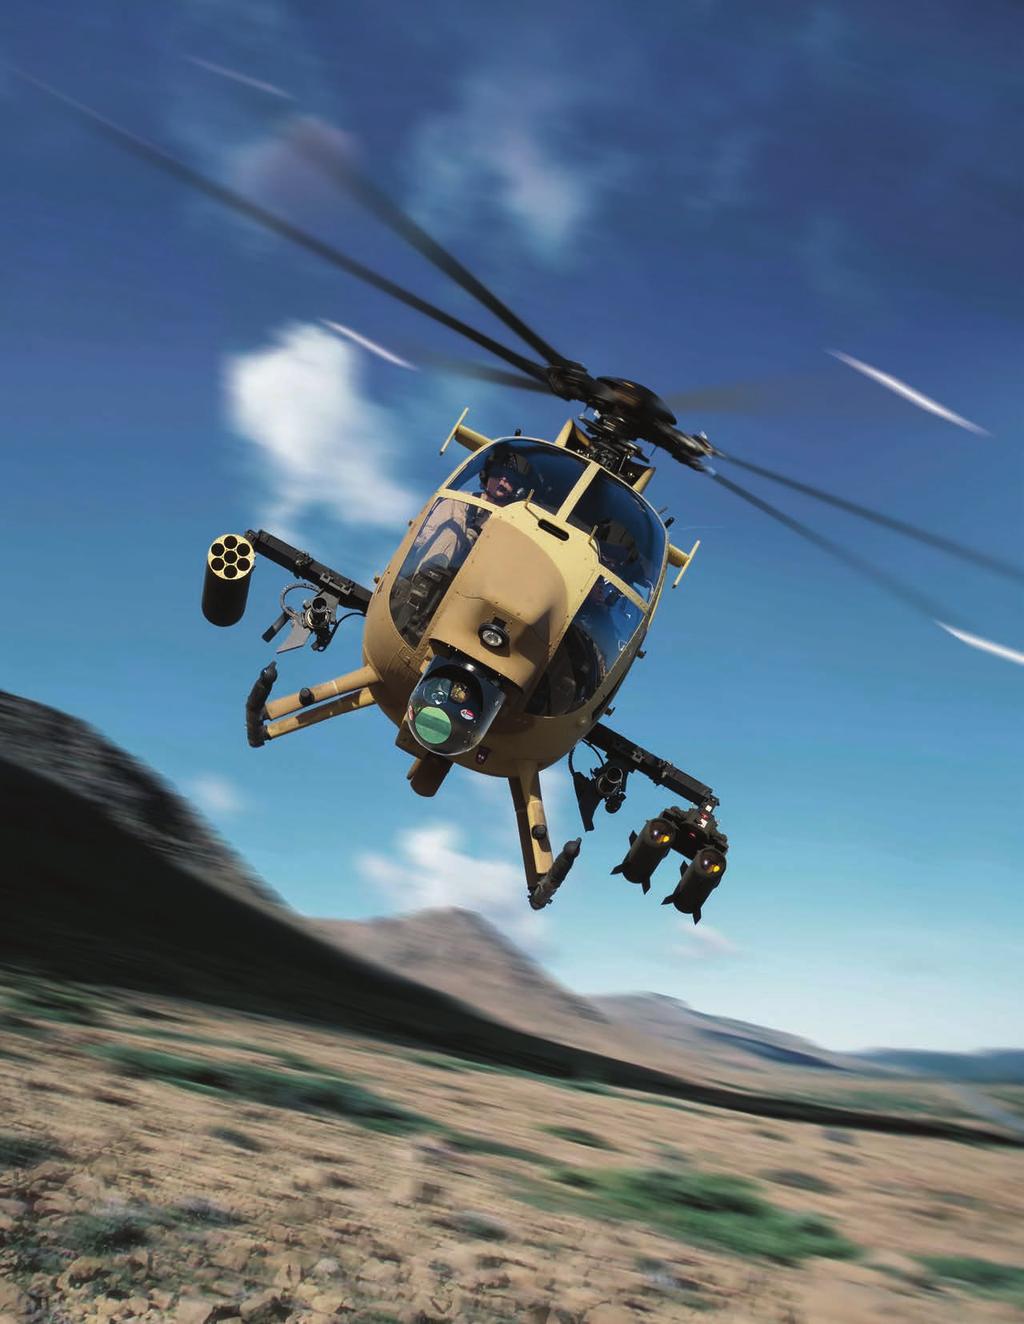 BOEING BUILDS THE AH-64 APACHE COMBAT HELICOPTER, AH-6 LITTLE BIRD LIGHT ATTACK/ RECONNAISSANCE